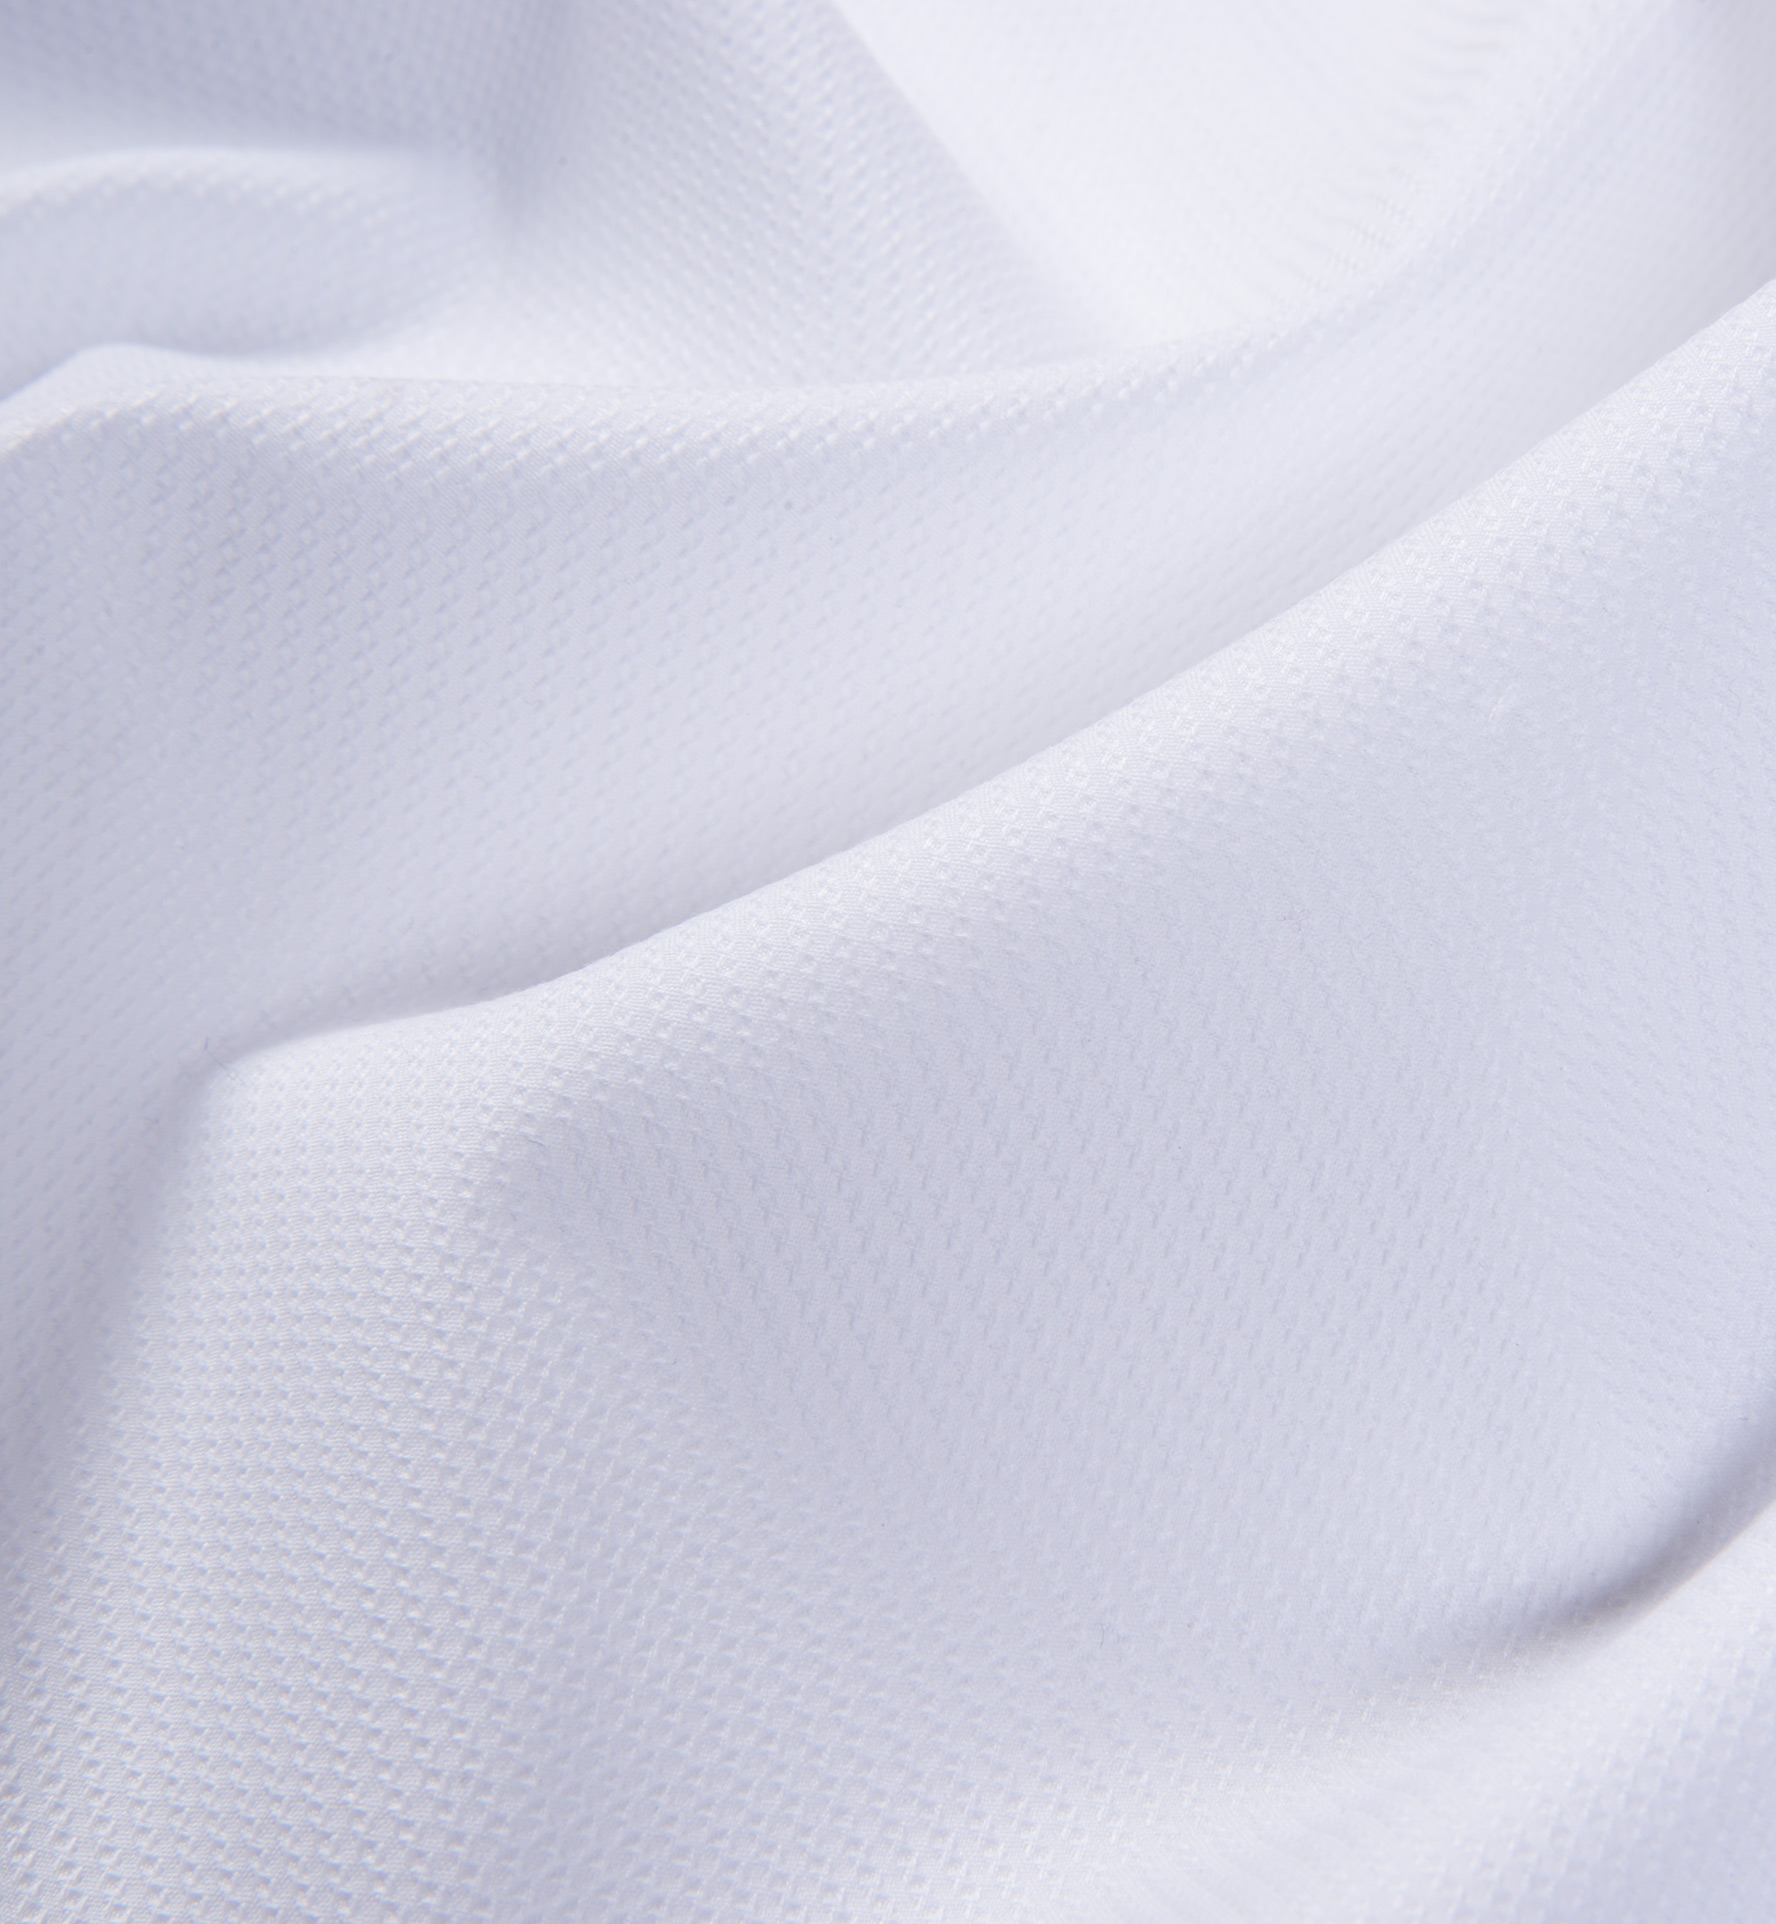 White Wrinkle-Resistant Diagonal Jacquard Shirts by Proper Cloth